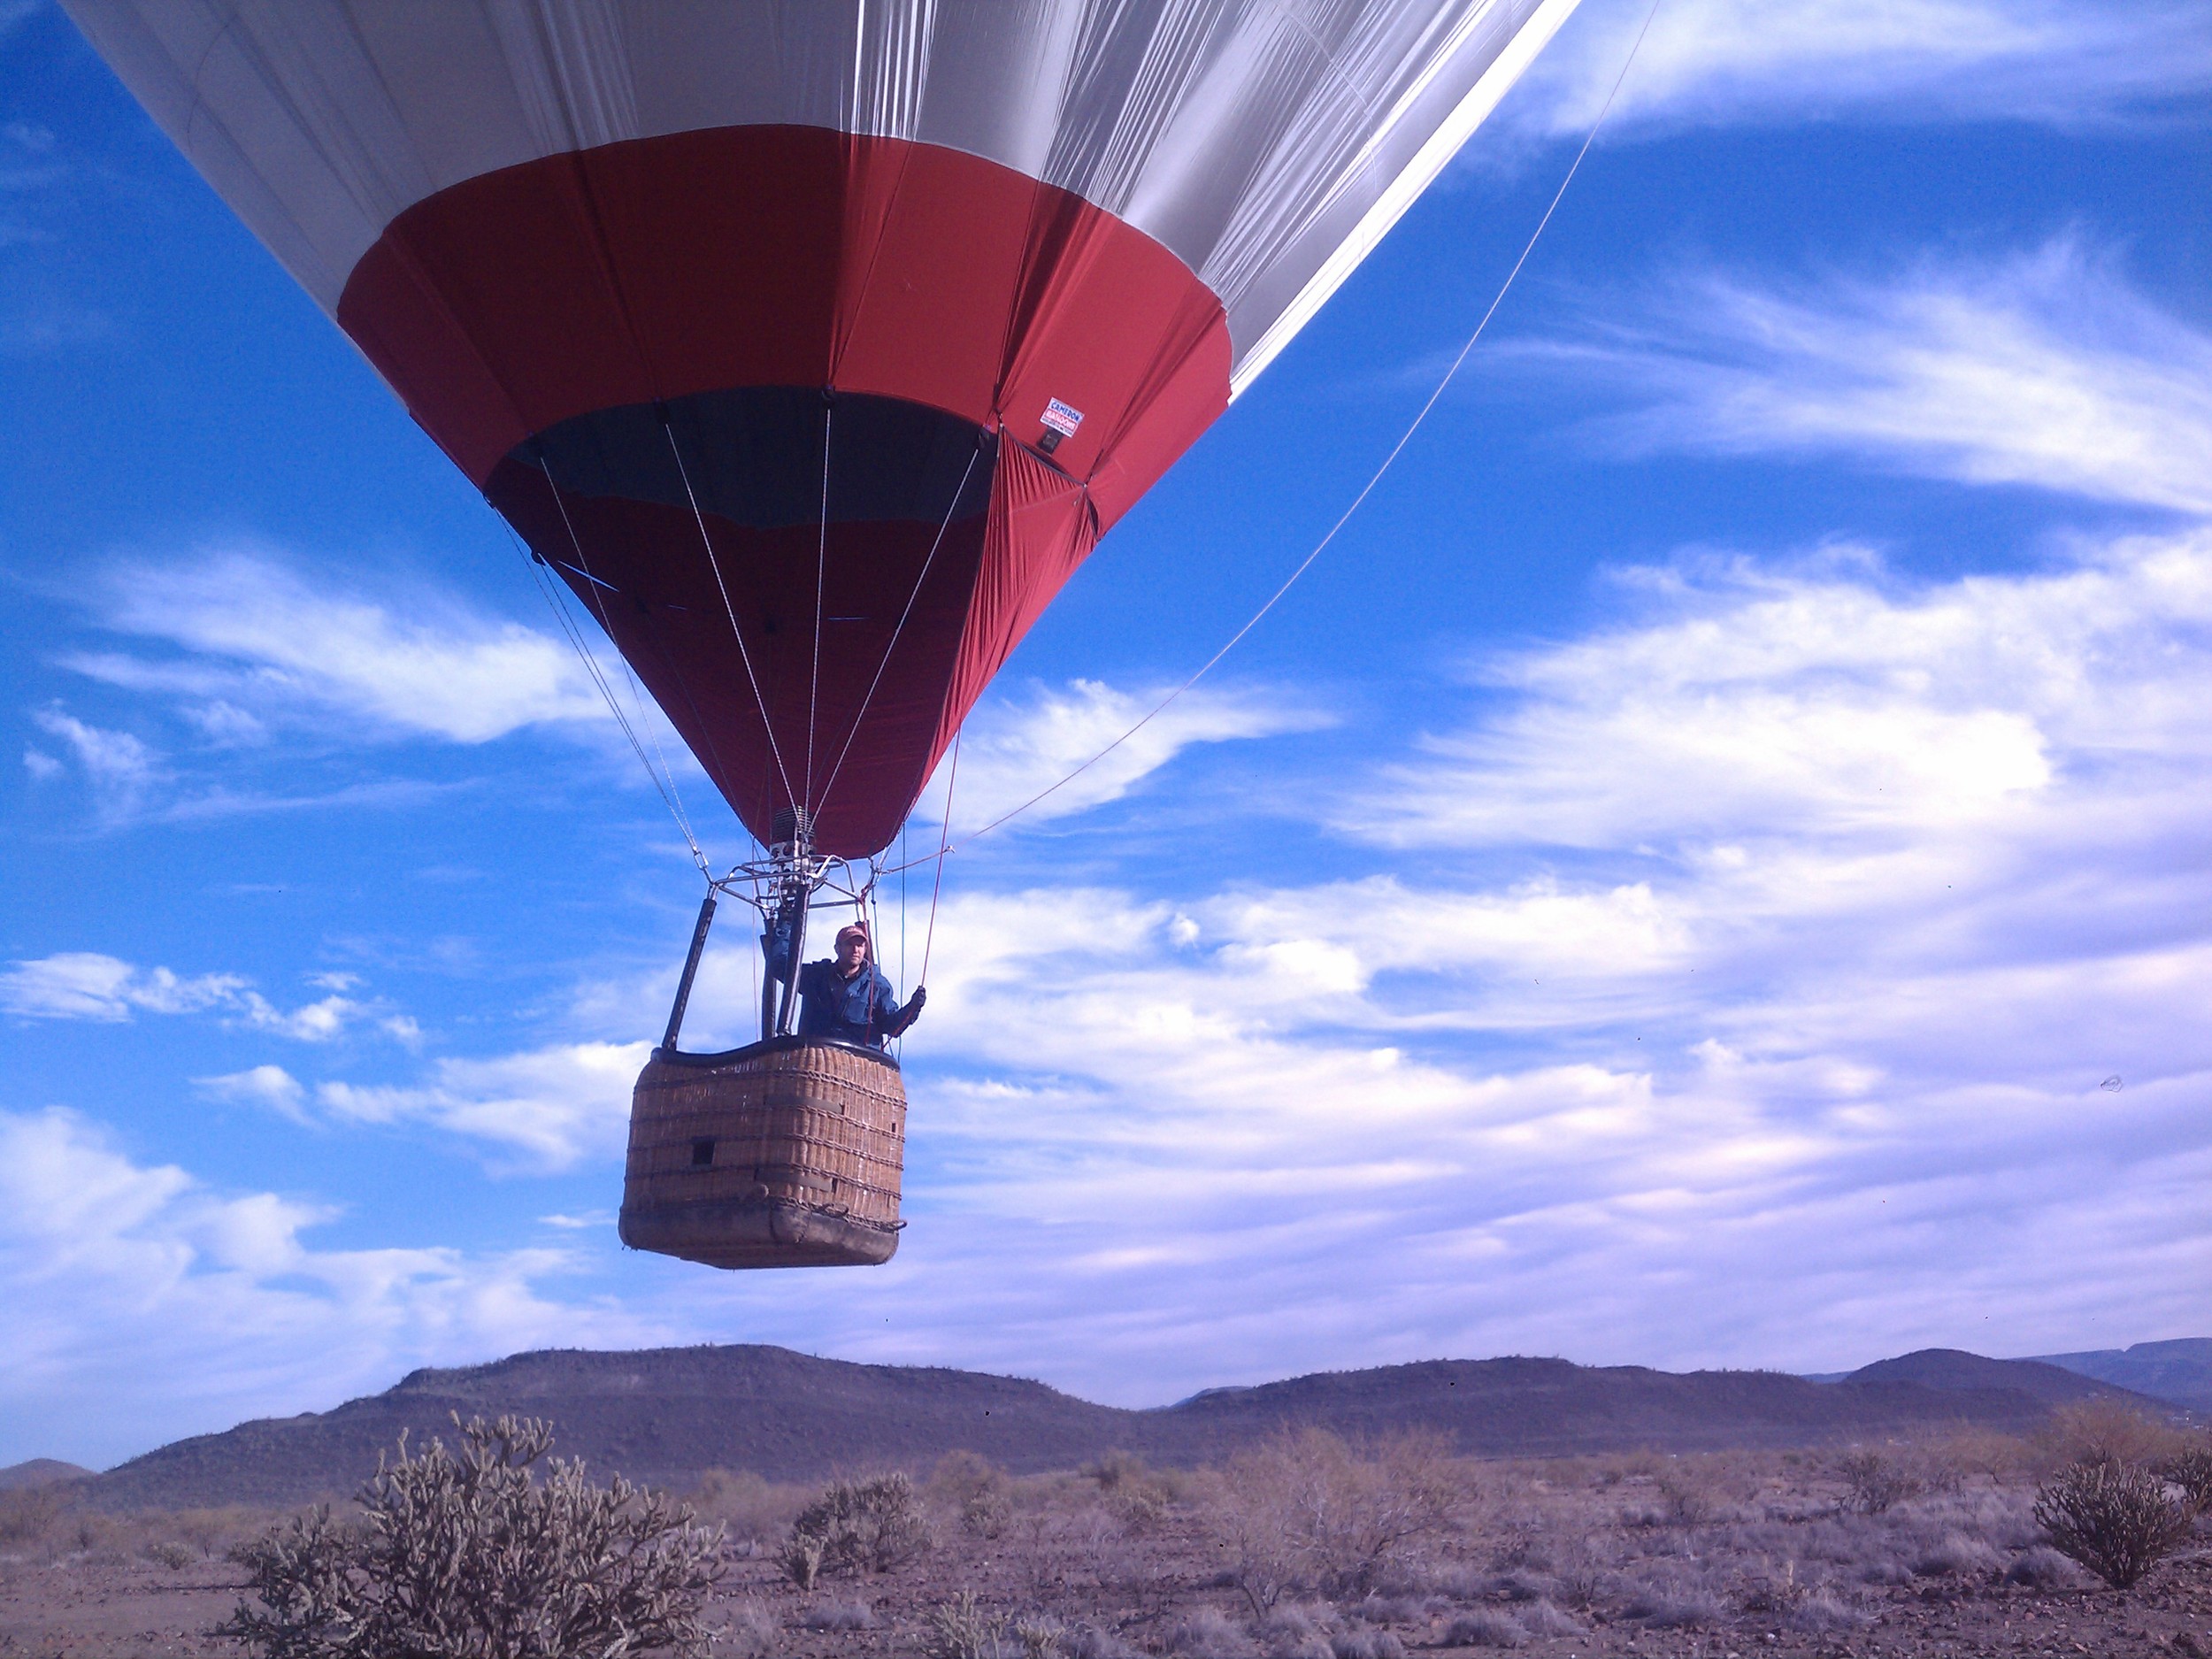 A student pilot solo flight in a hot air balloon.